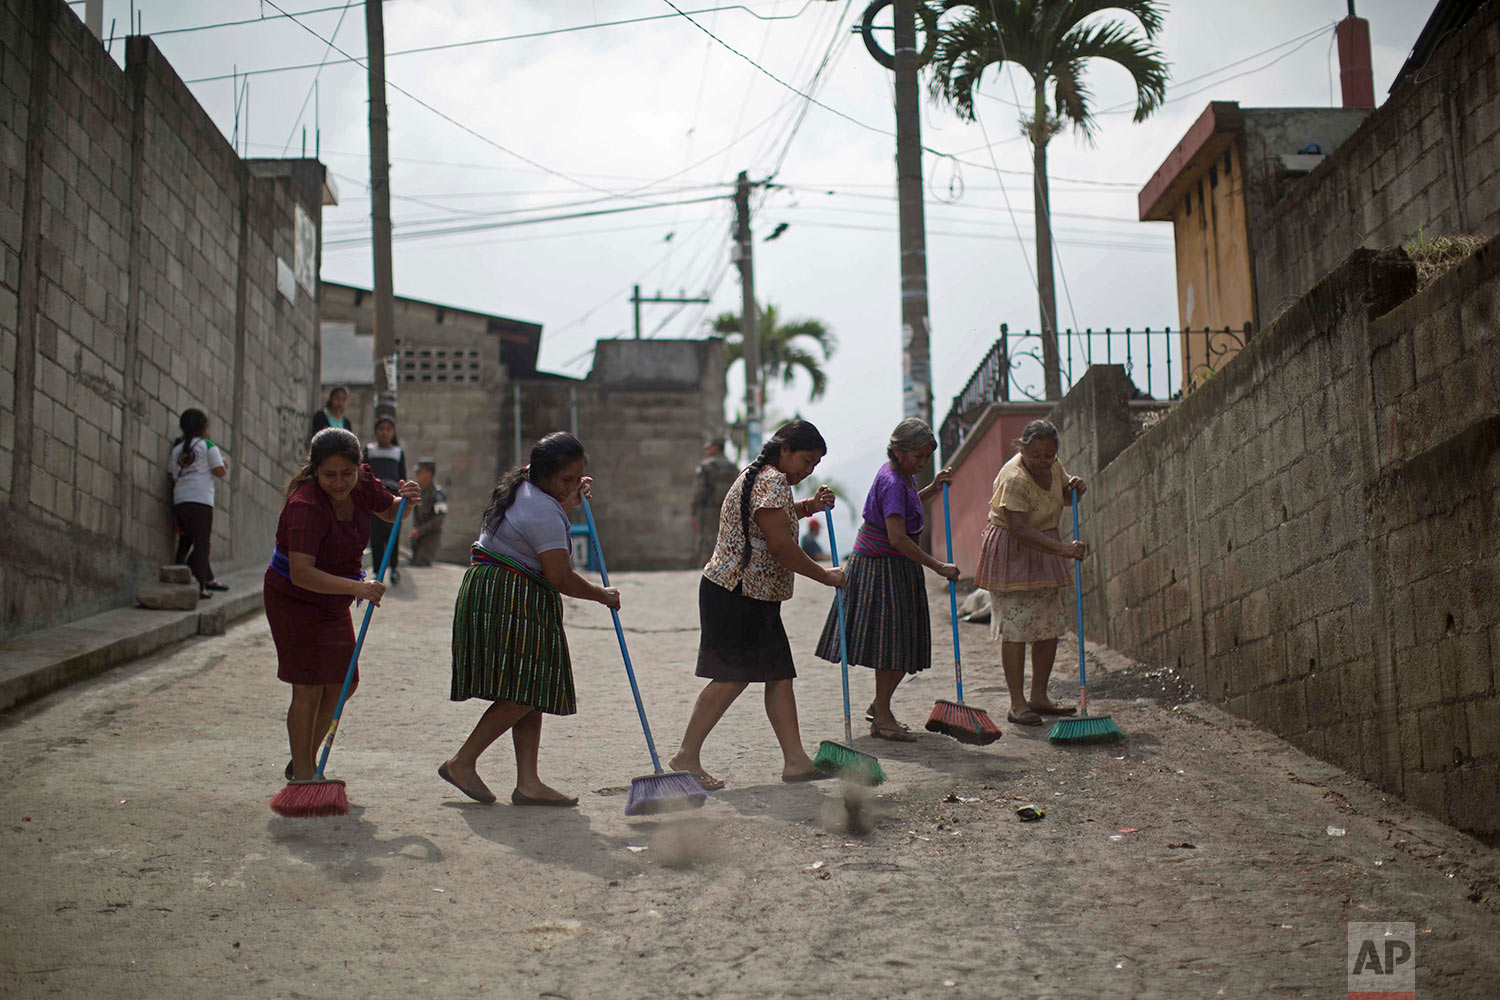  Women sweep volcanic ash after the eruption of the Volcano of Fire in San Juan Alotenango, Guatemala, June 14, 2018. (AP Photo/Luis Soto) 